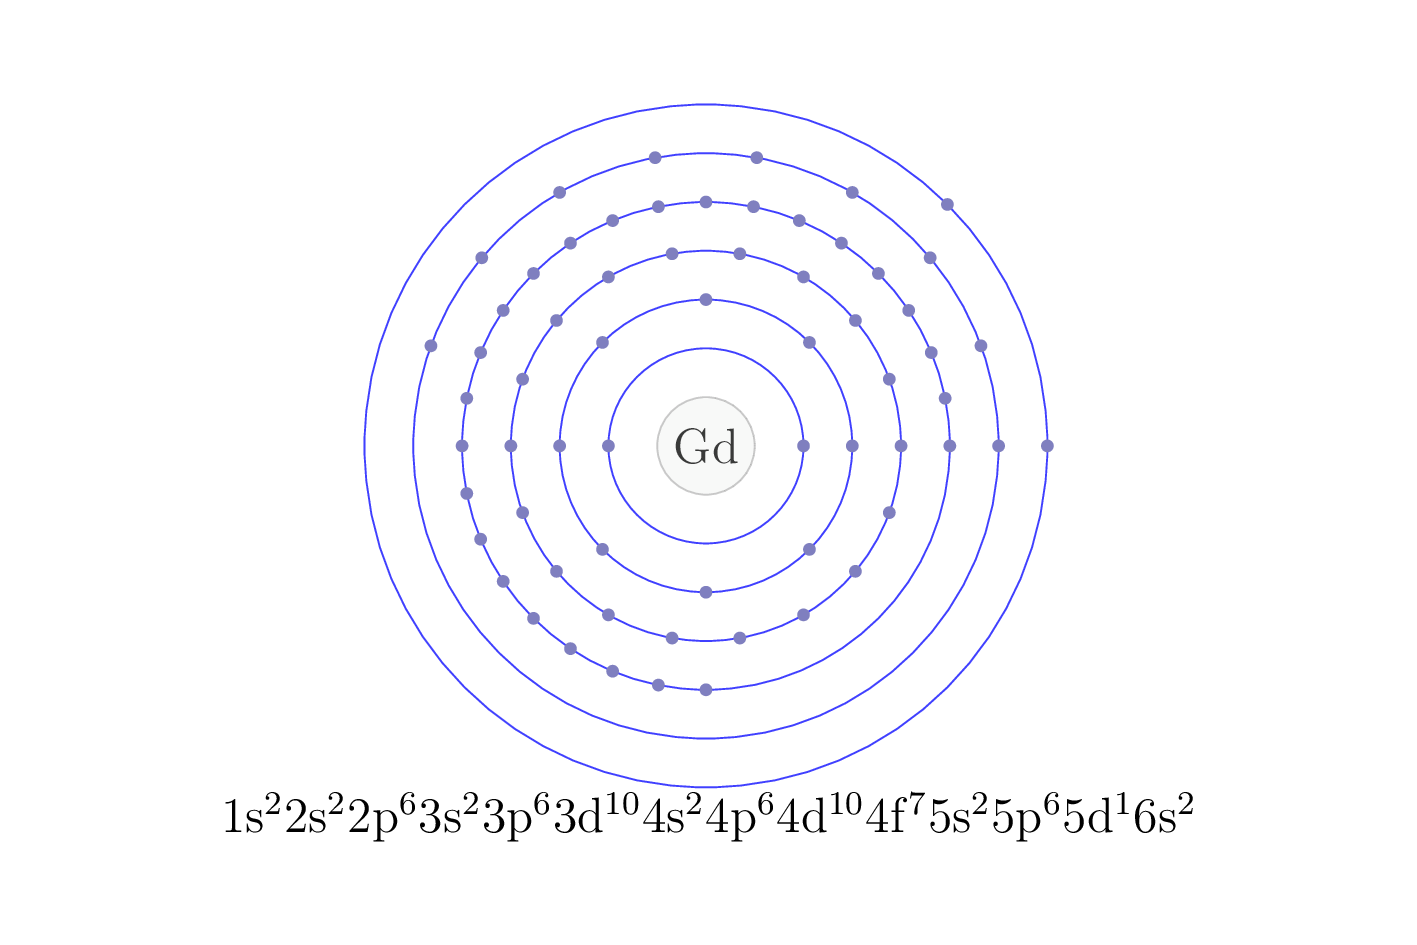 electron configuration of element Gd